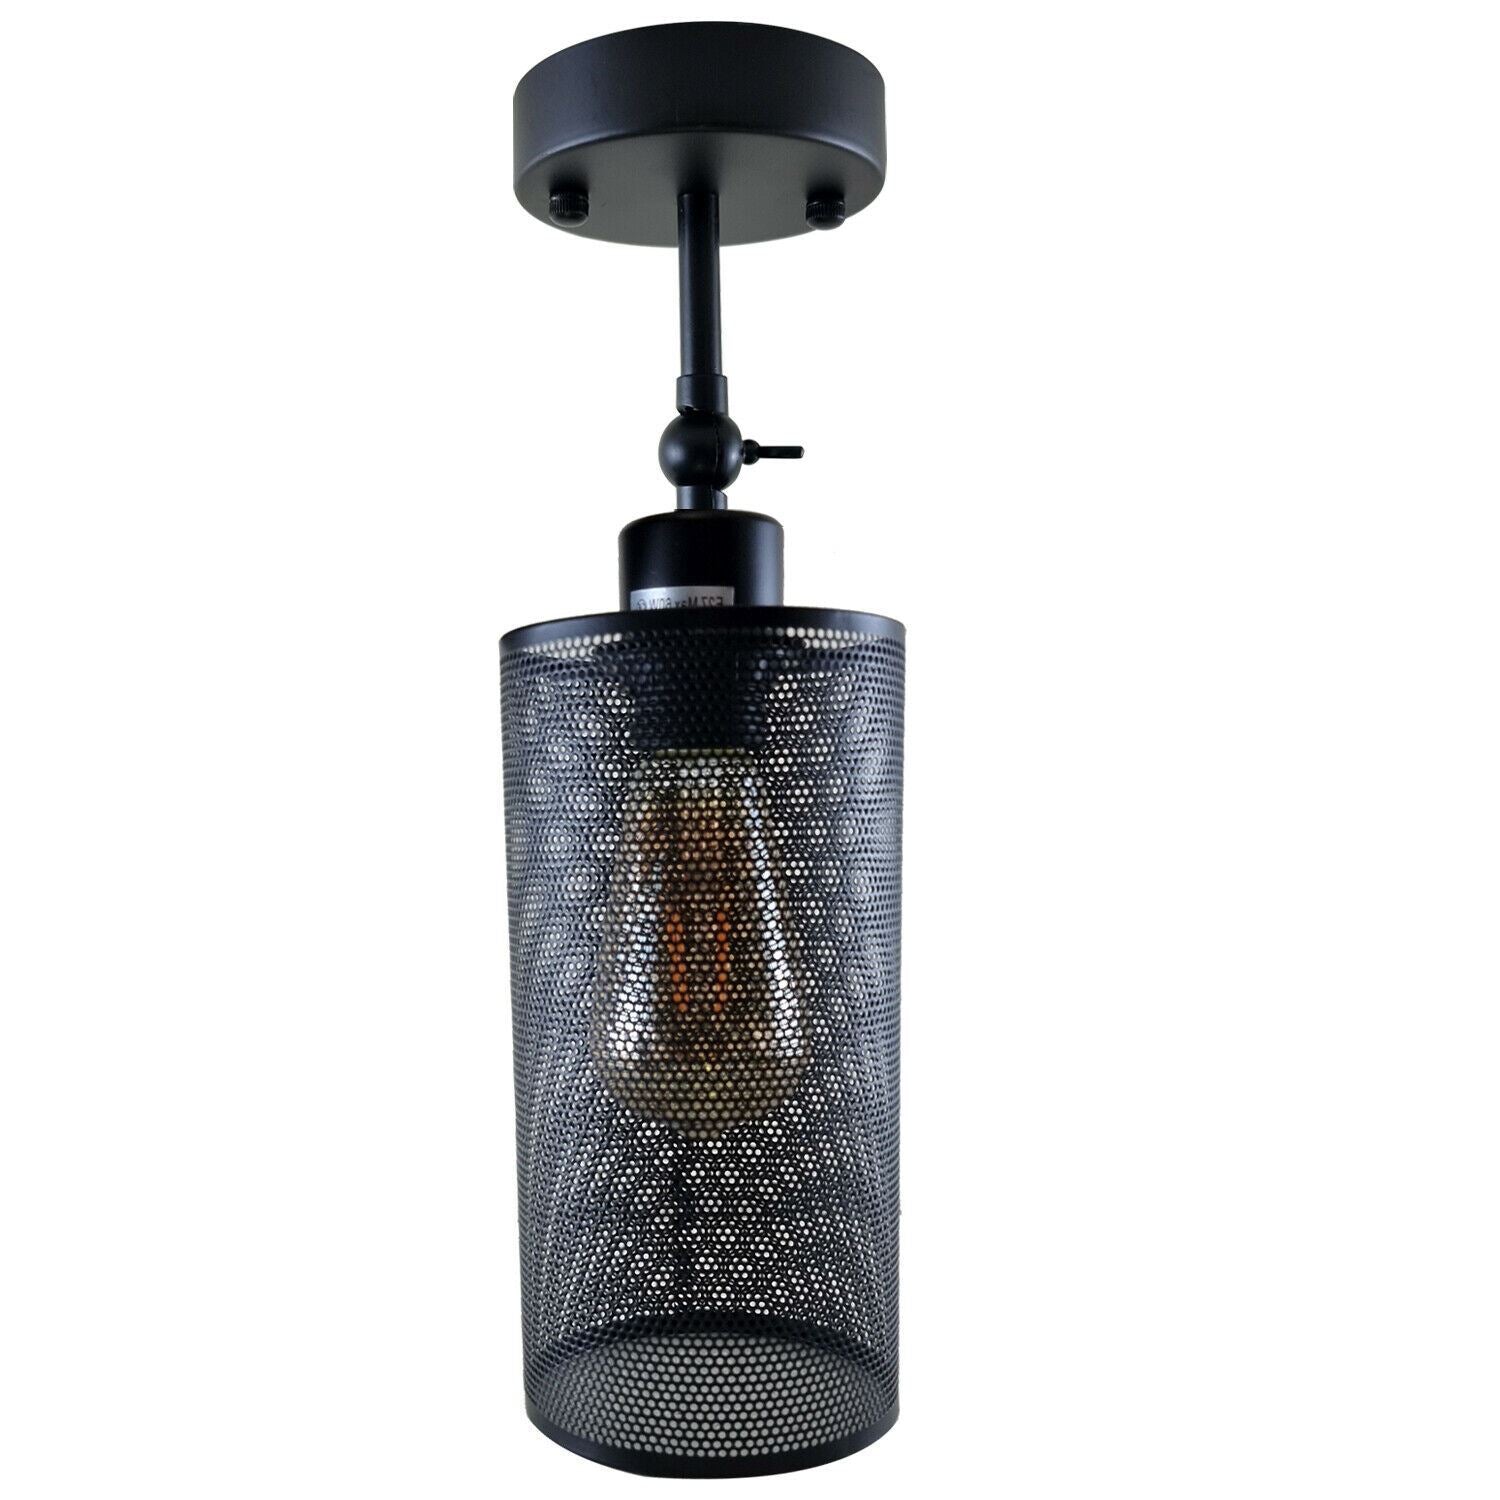 Modern Vintage Industrial Retro Wall Mounted Light Black Sconce with Barrel Cage Lamp Fixture Light UK~1237 - LEDSone UK Ltd